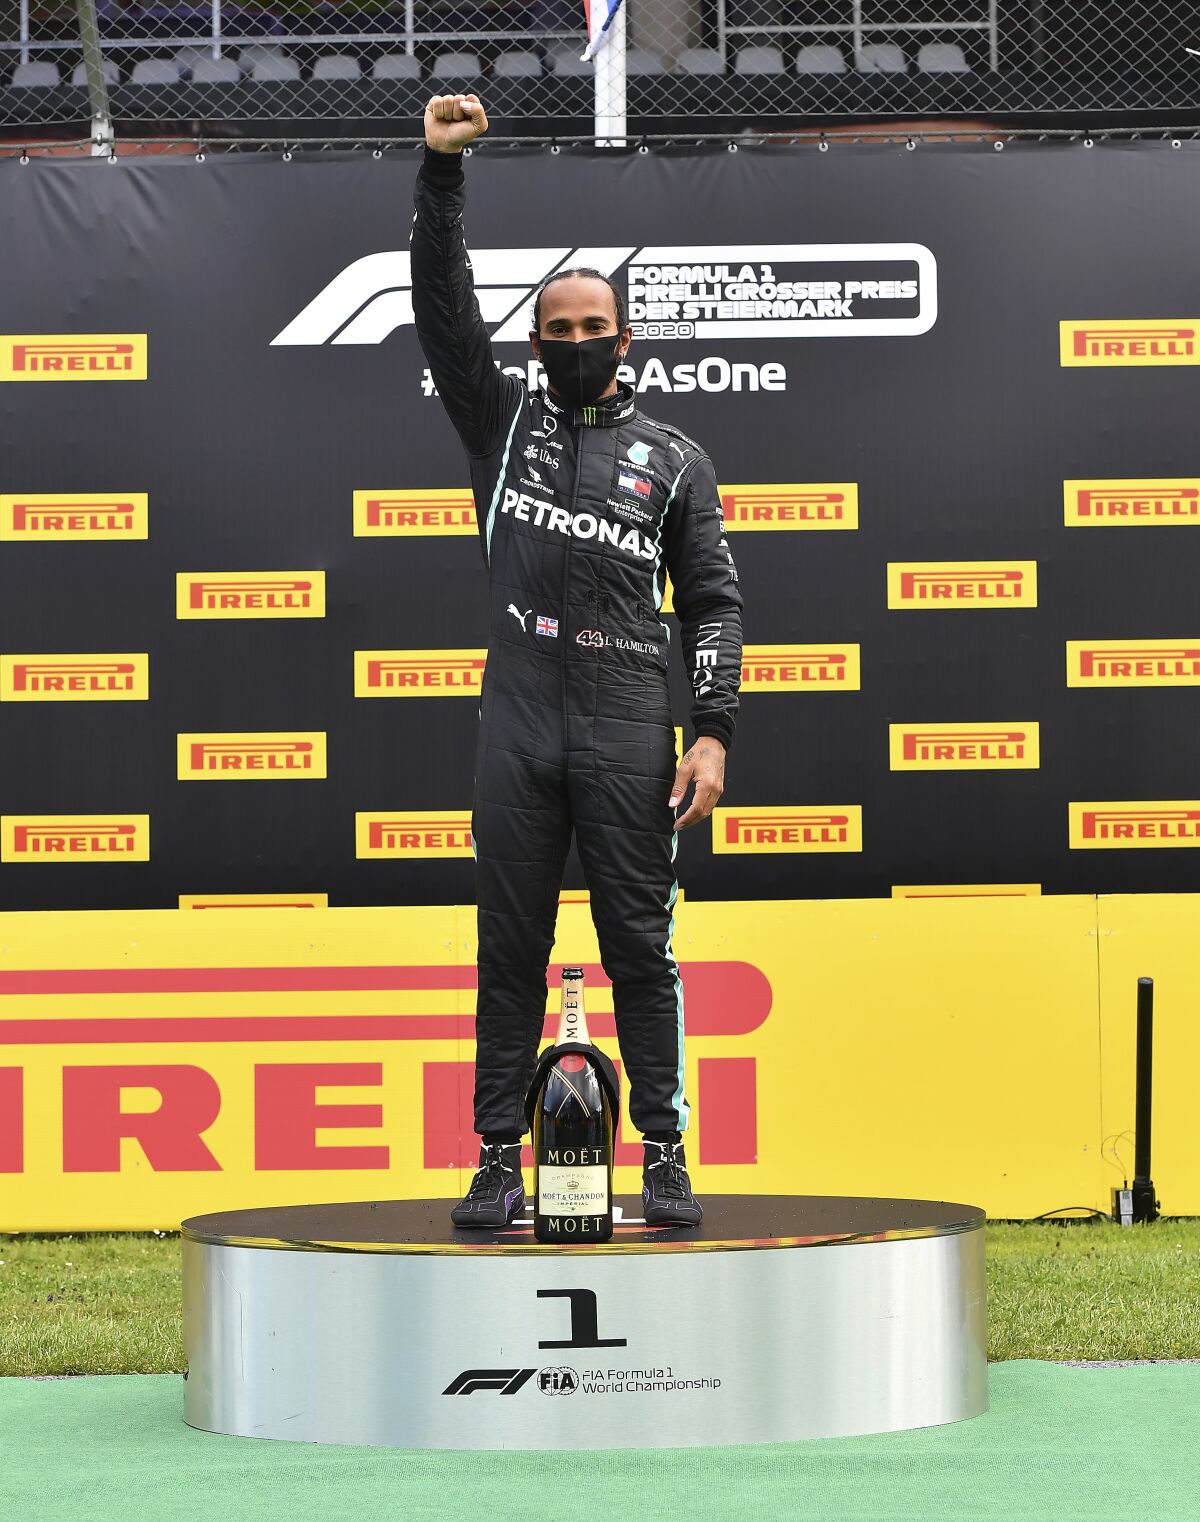 Formula One's Lewis Hamilton raises his right fist on the podium in Spielberg, Austria.